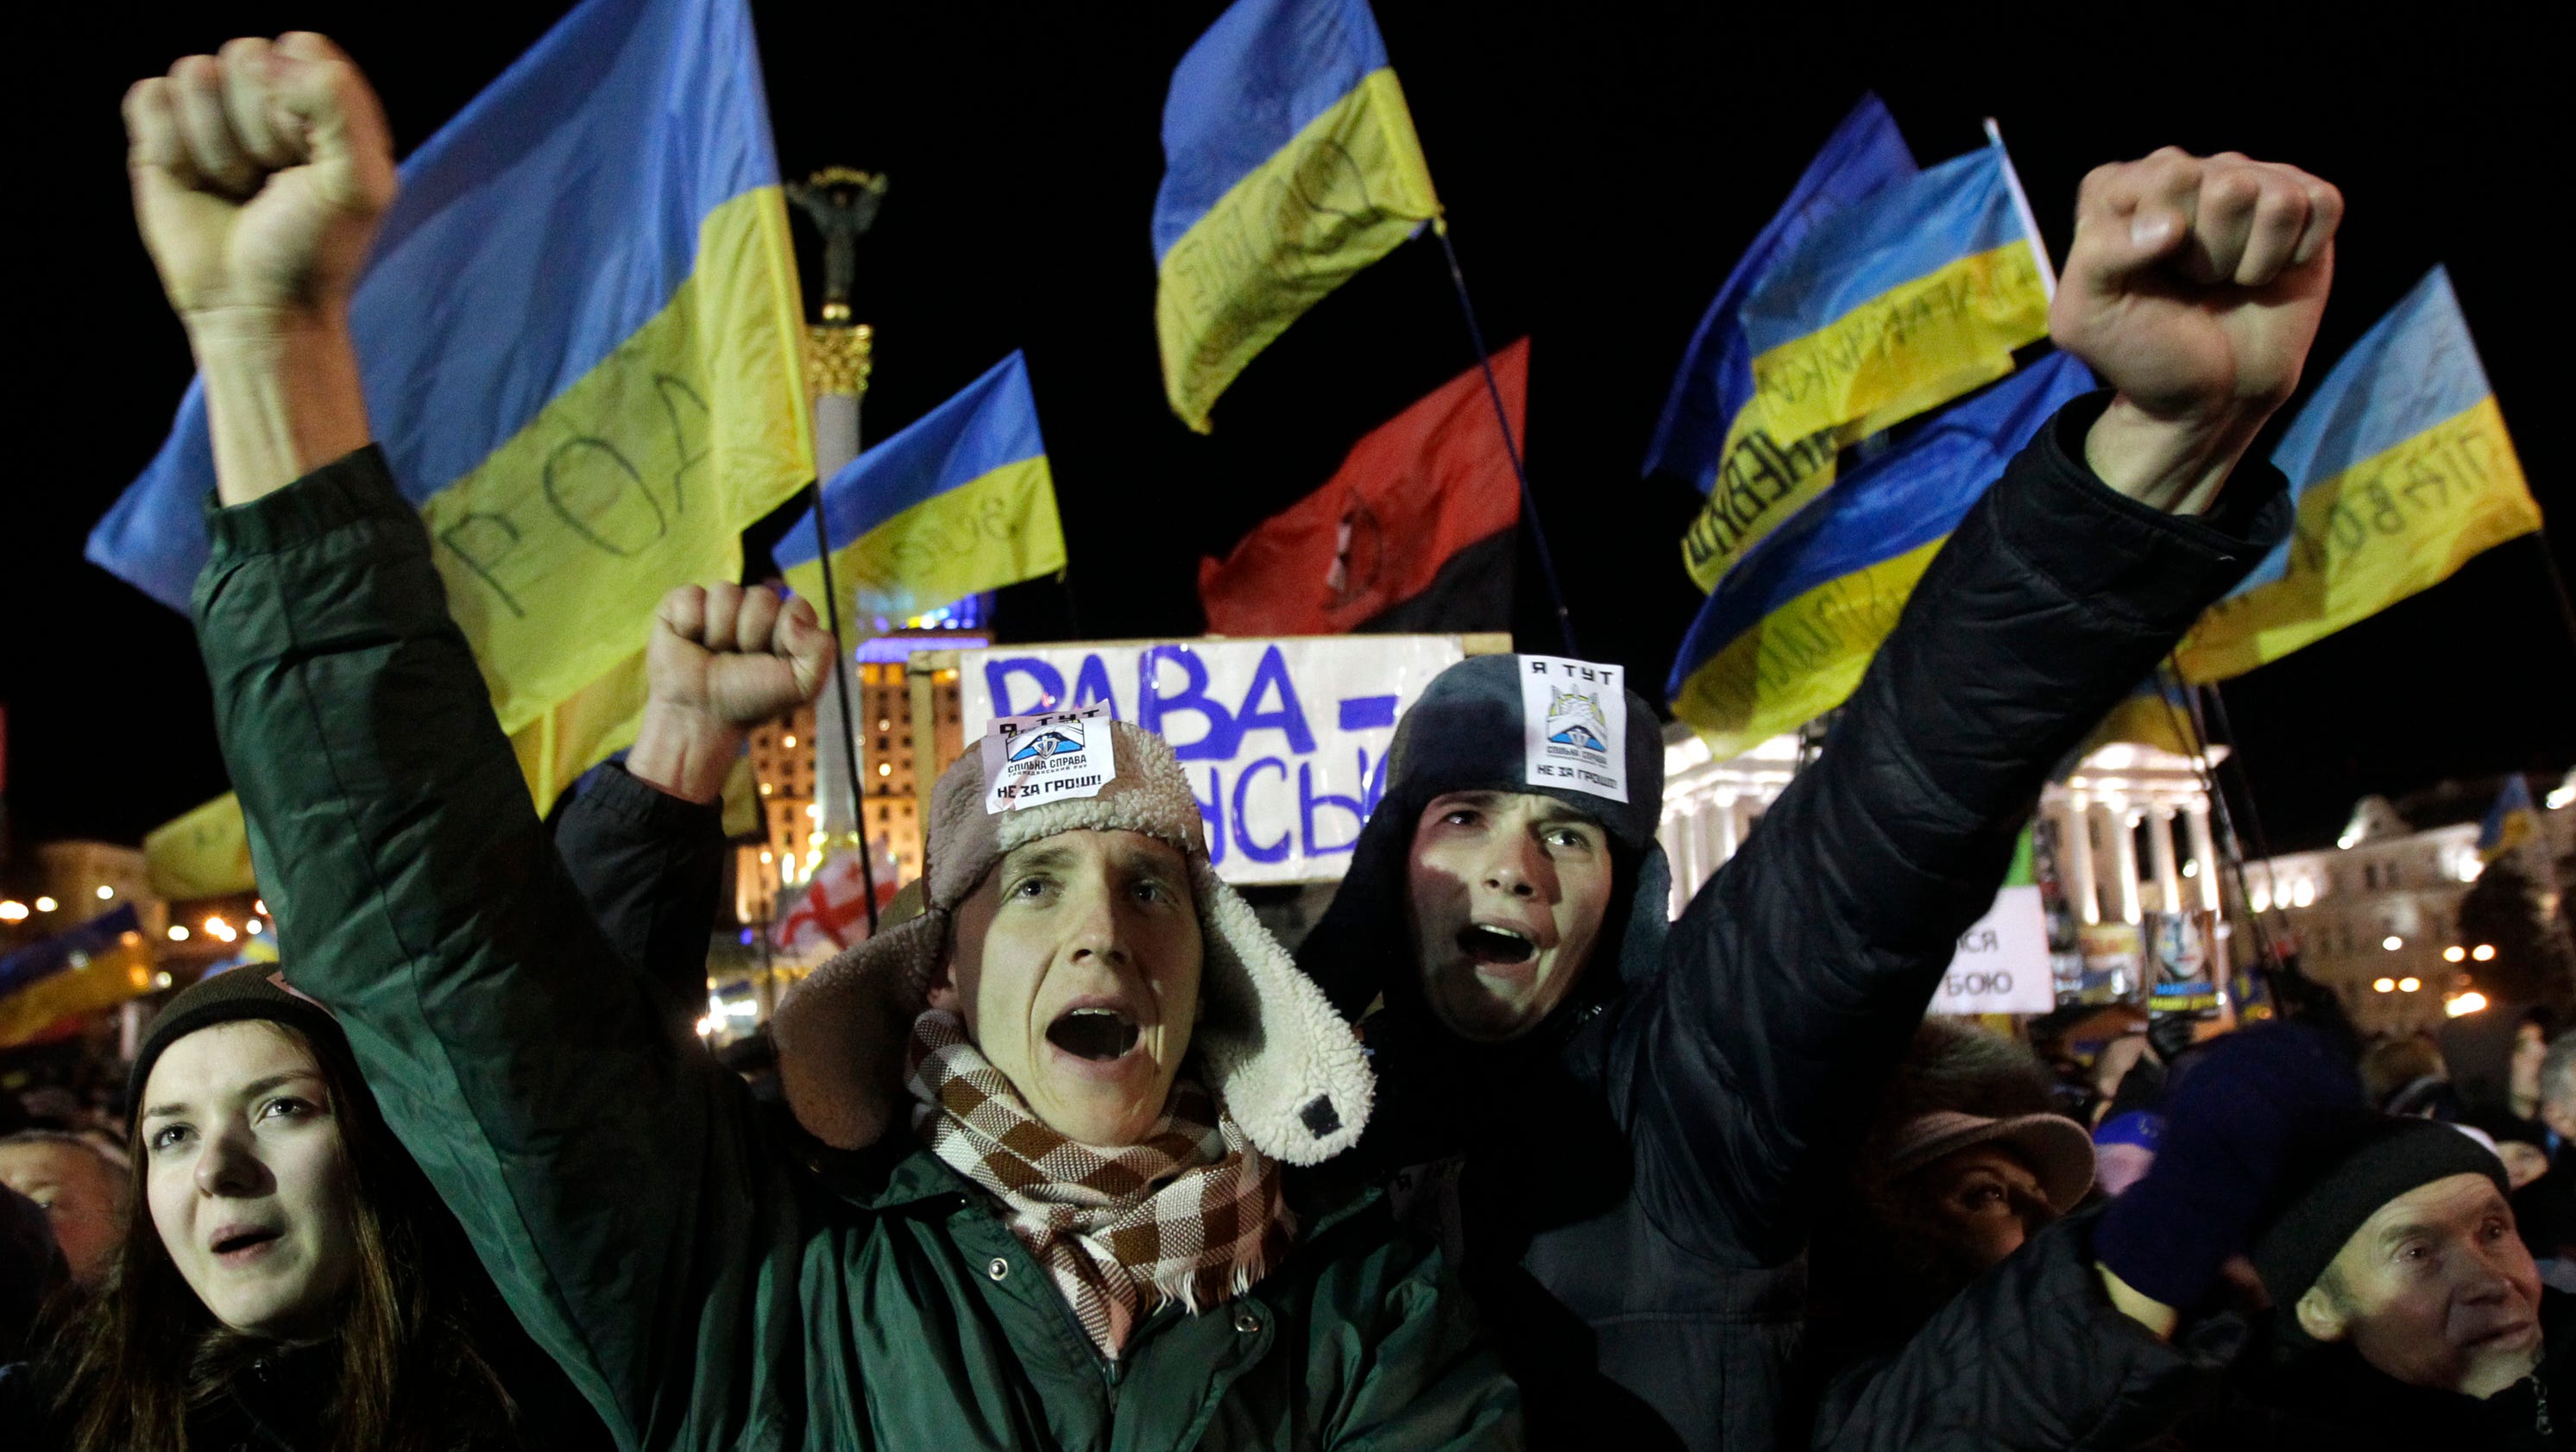 Kiev protests continue, resolution elusive